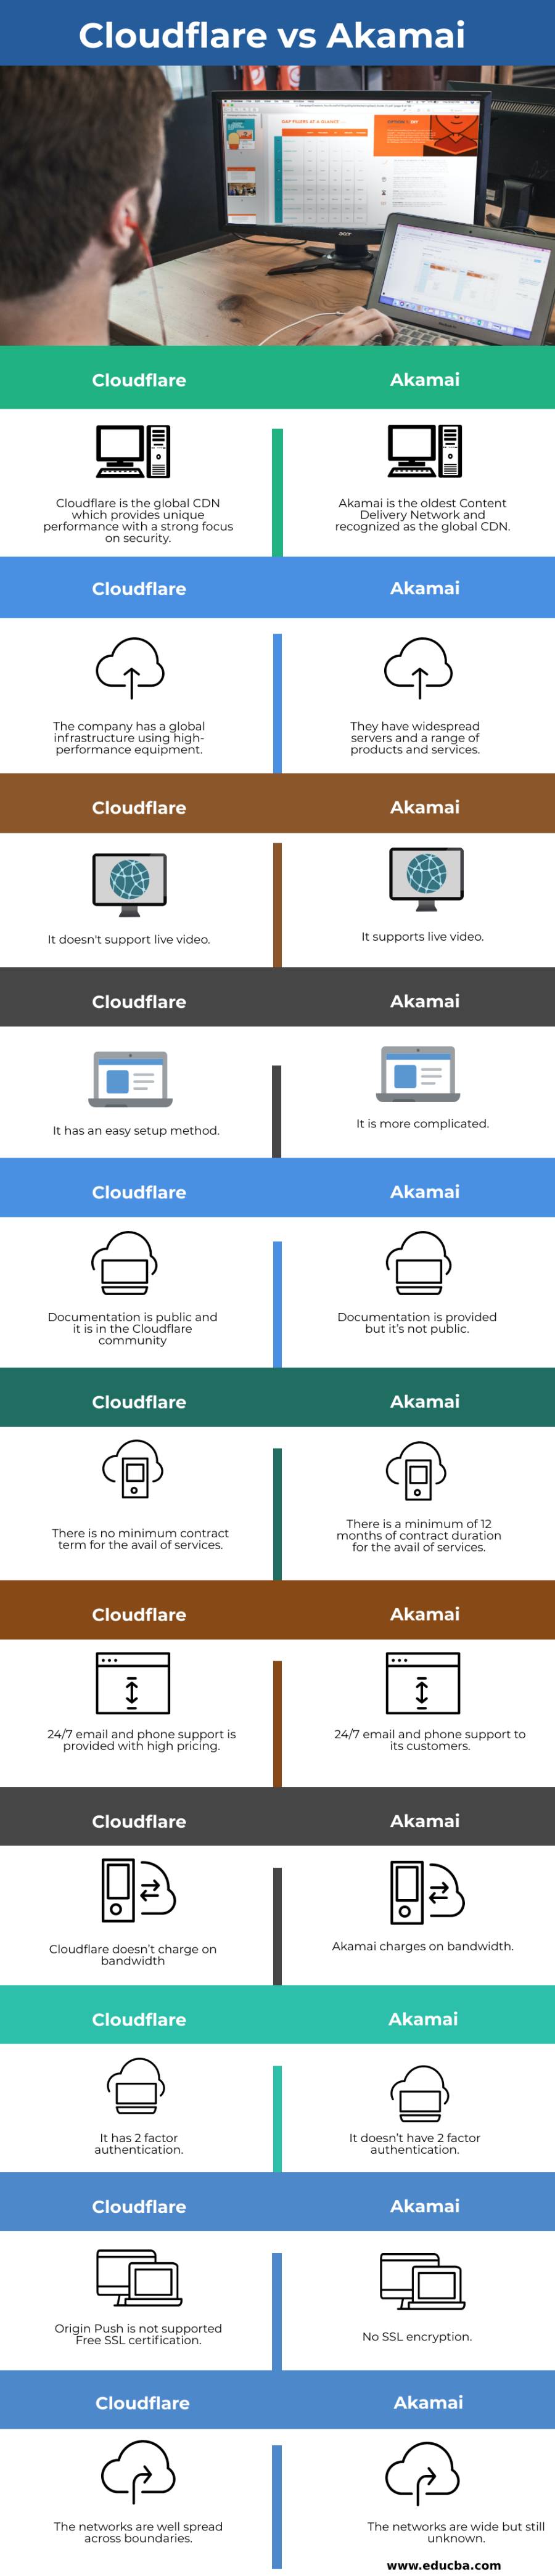 Cloudflare vs Akamai info